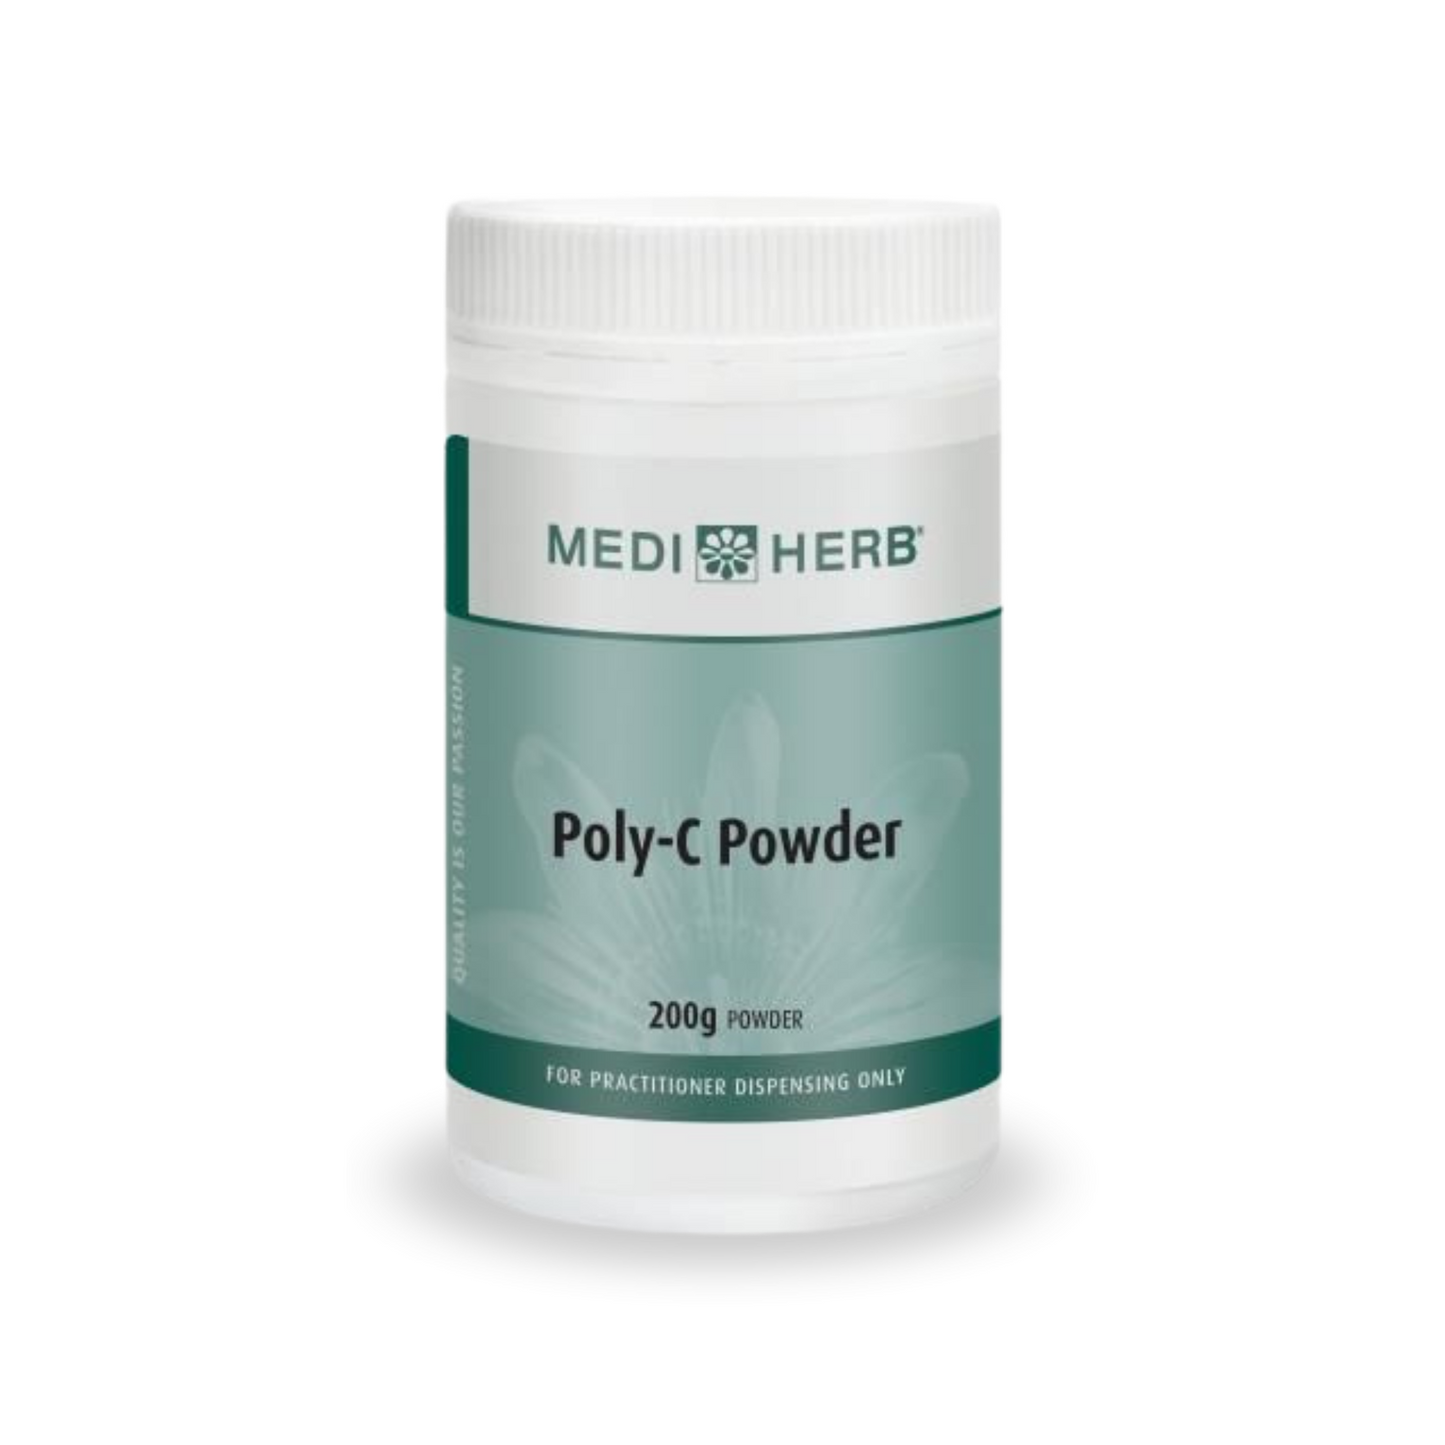 MediHerb Poly-C Powder 200g